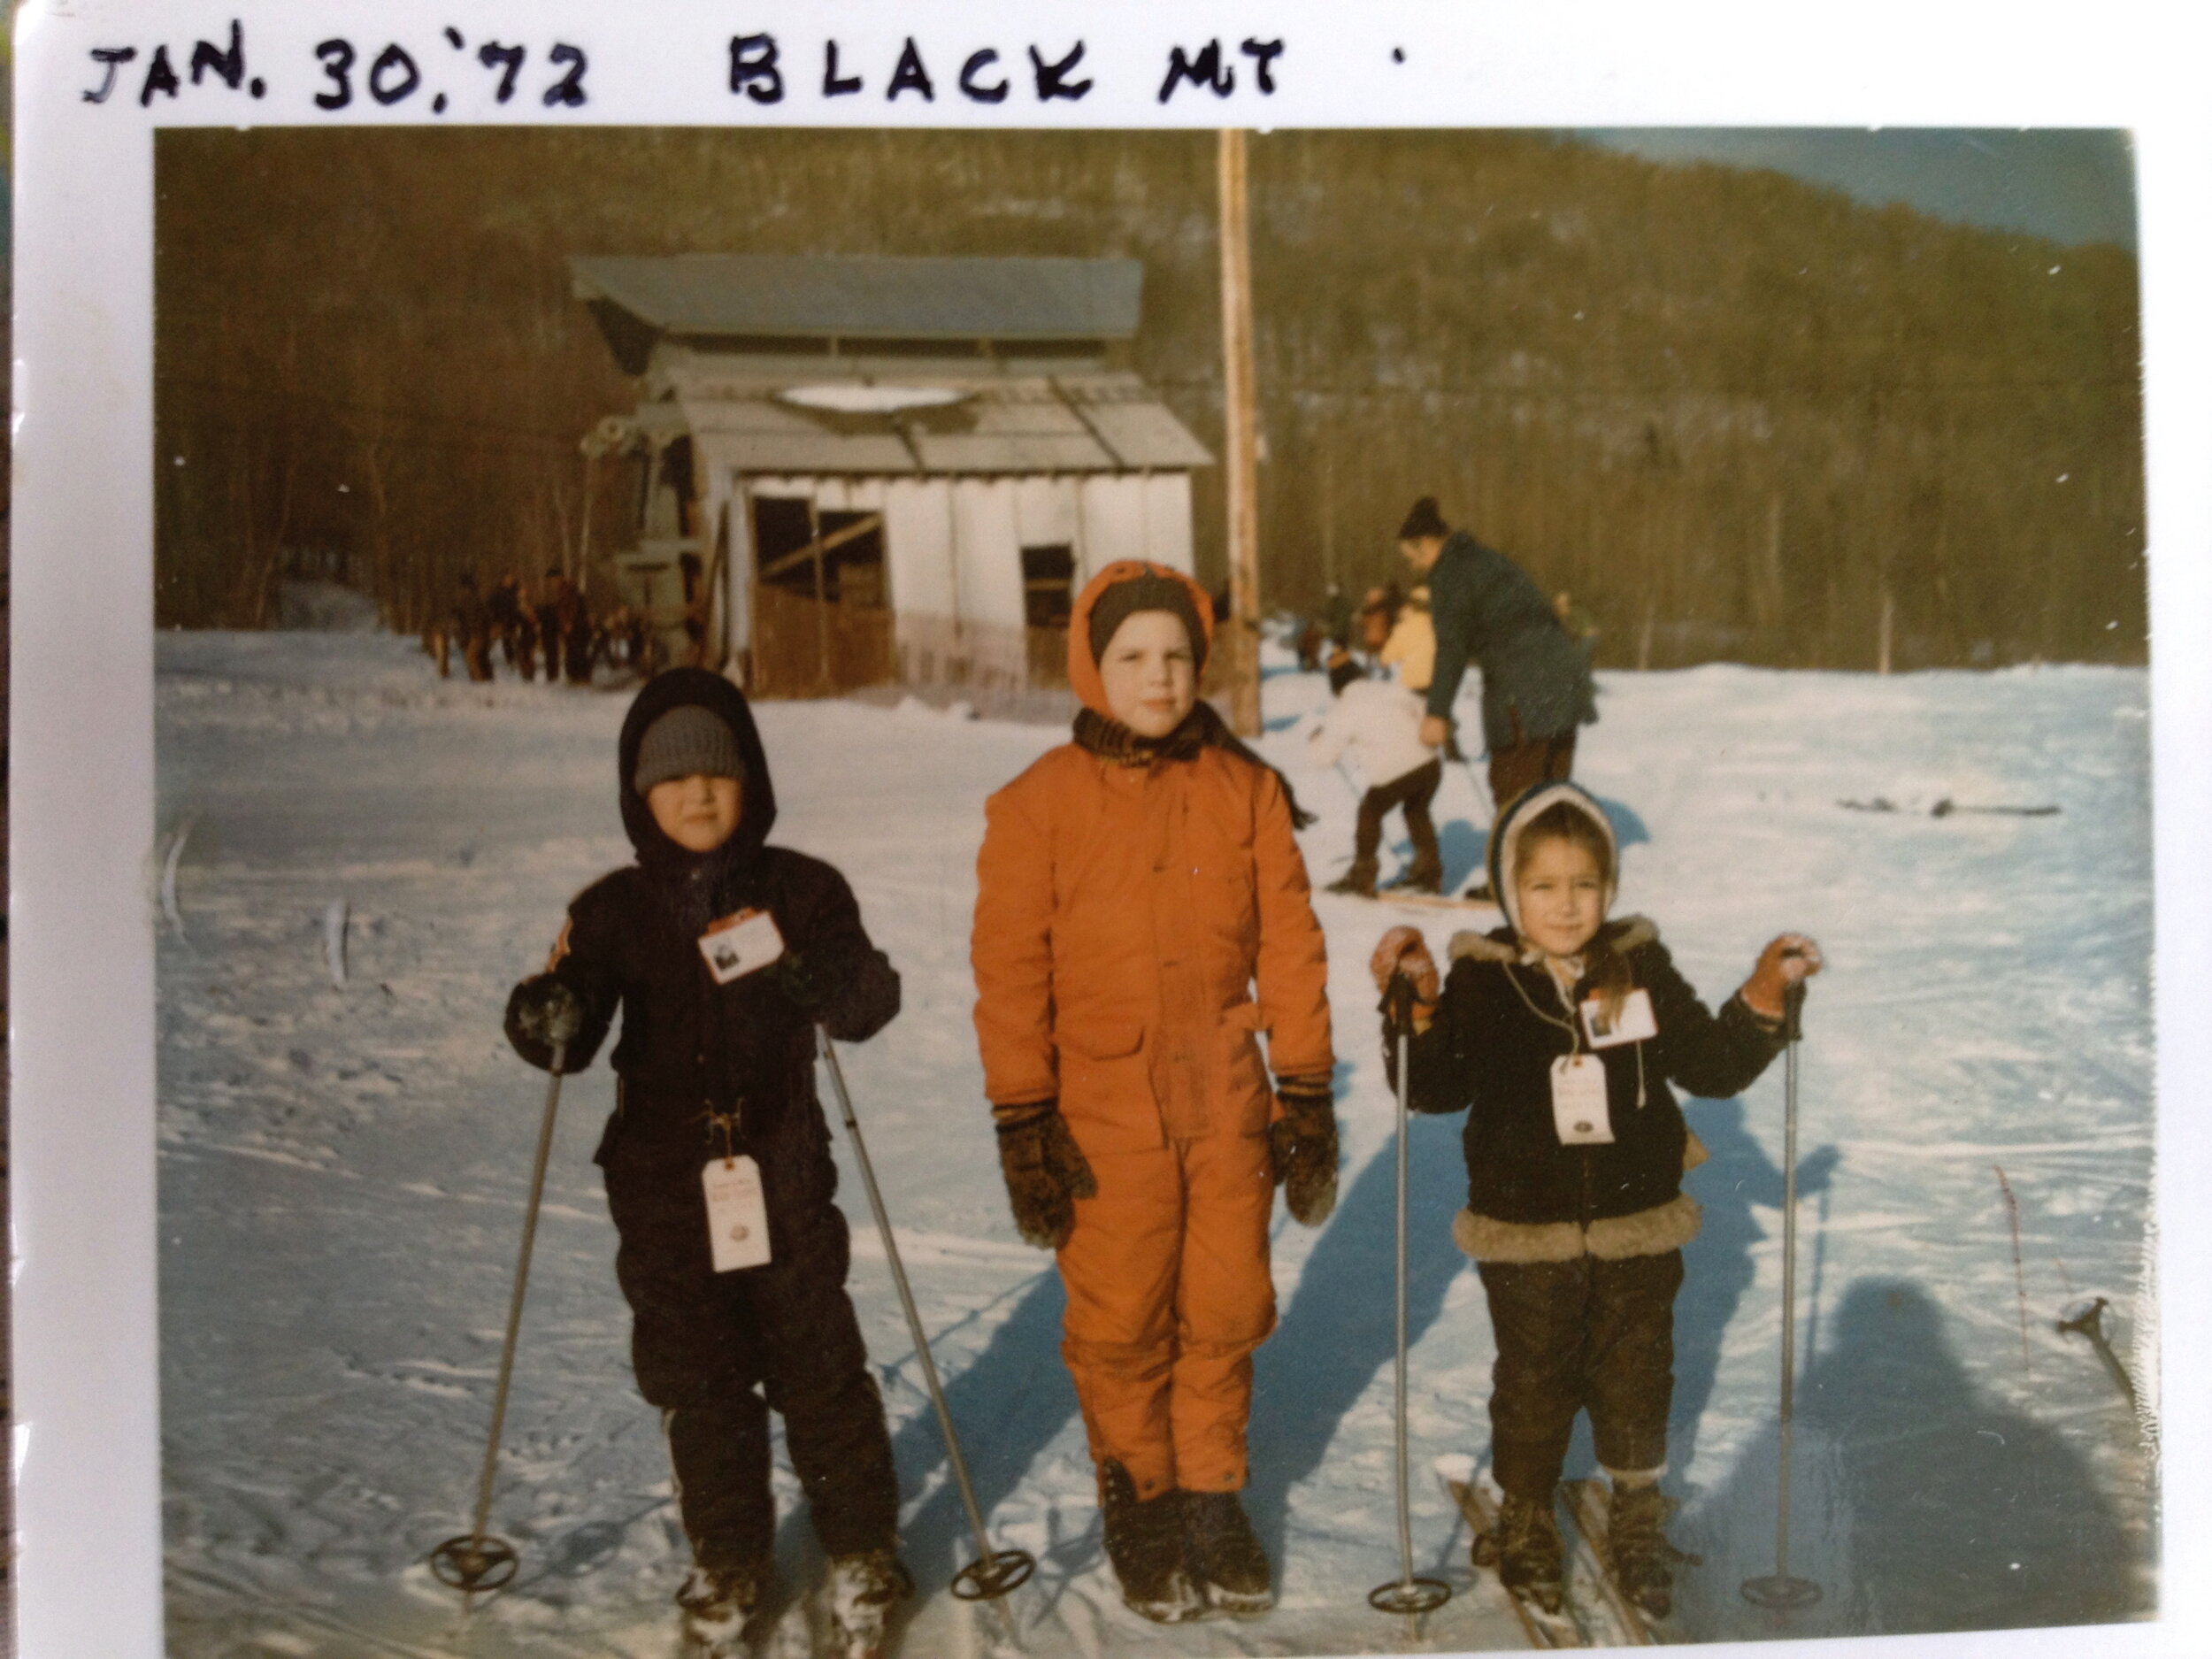 Black Mountain Winter Carnival, 1/30/72